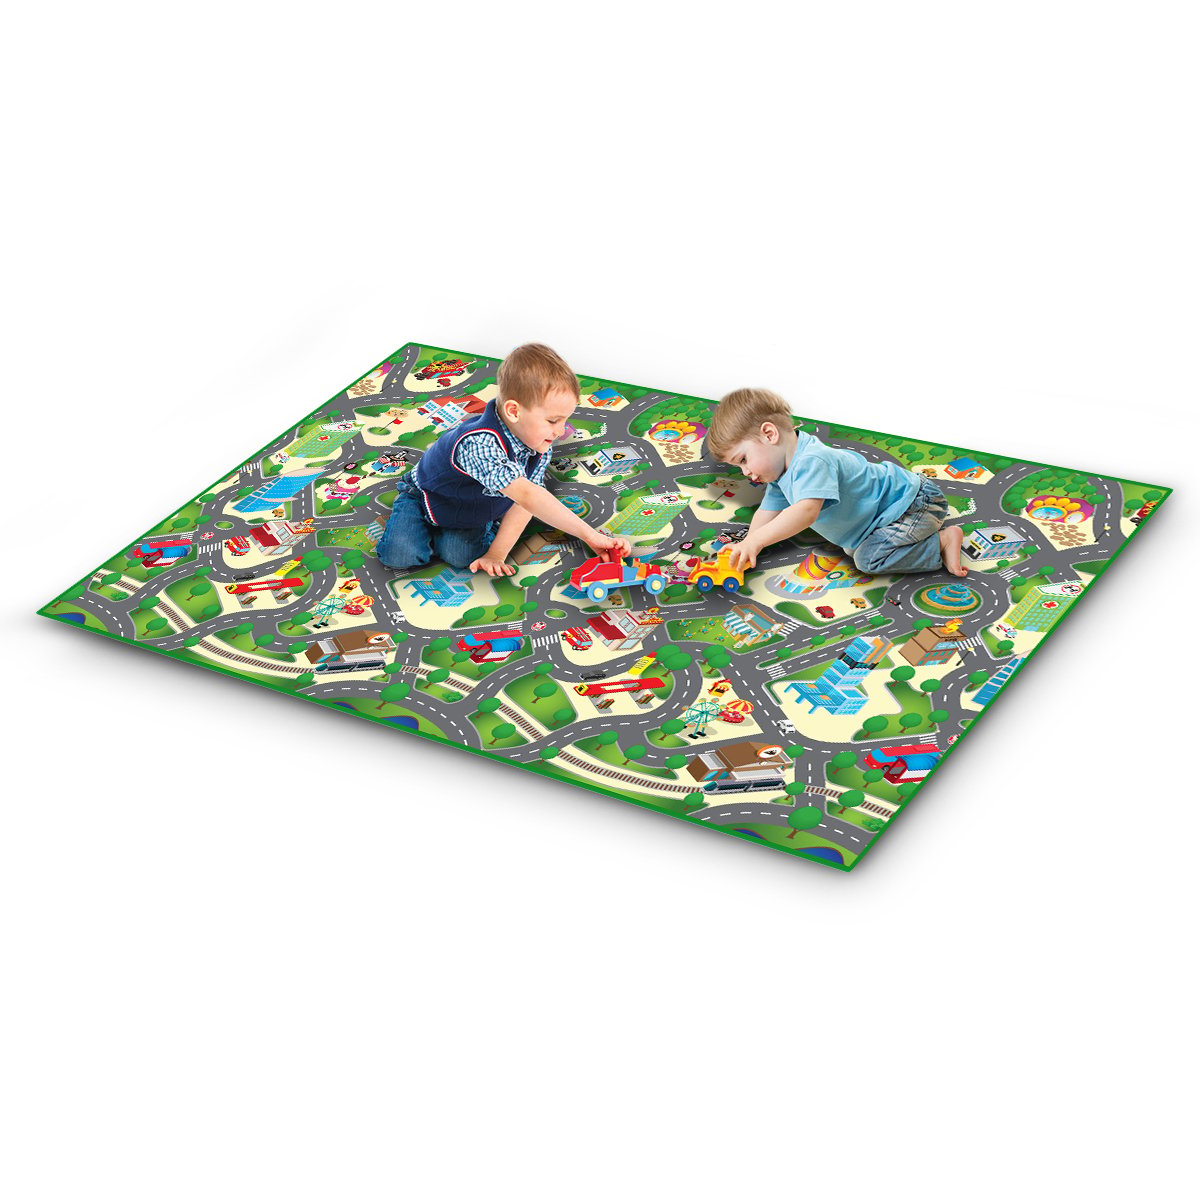 Rollmatz City Design Baby Kids Play Floor Mat 200cm x 120cm 1